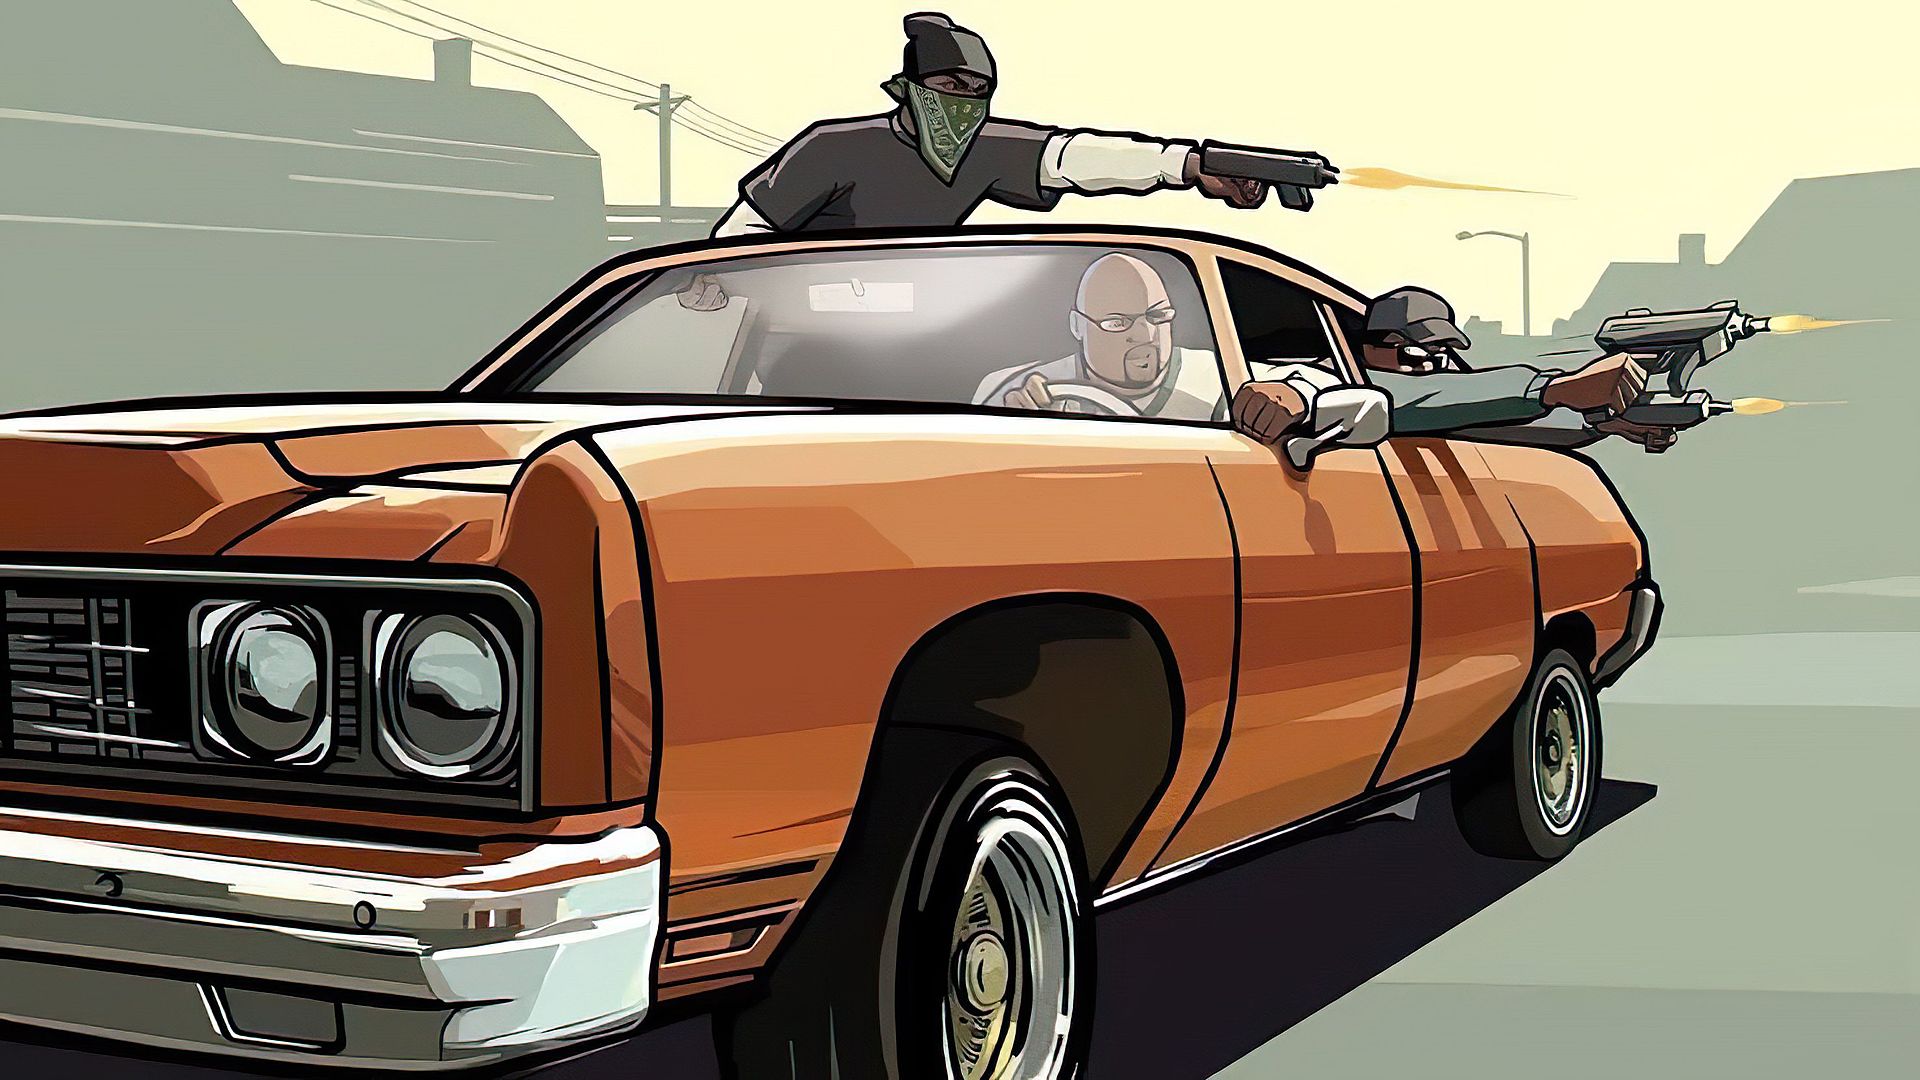 grand theft auto: san andreas, video game, grand theft auto